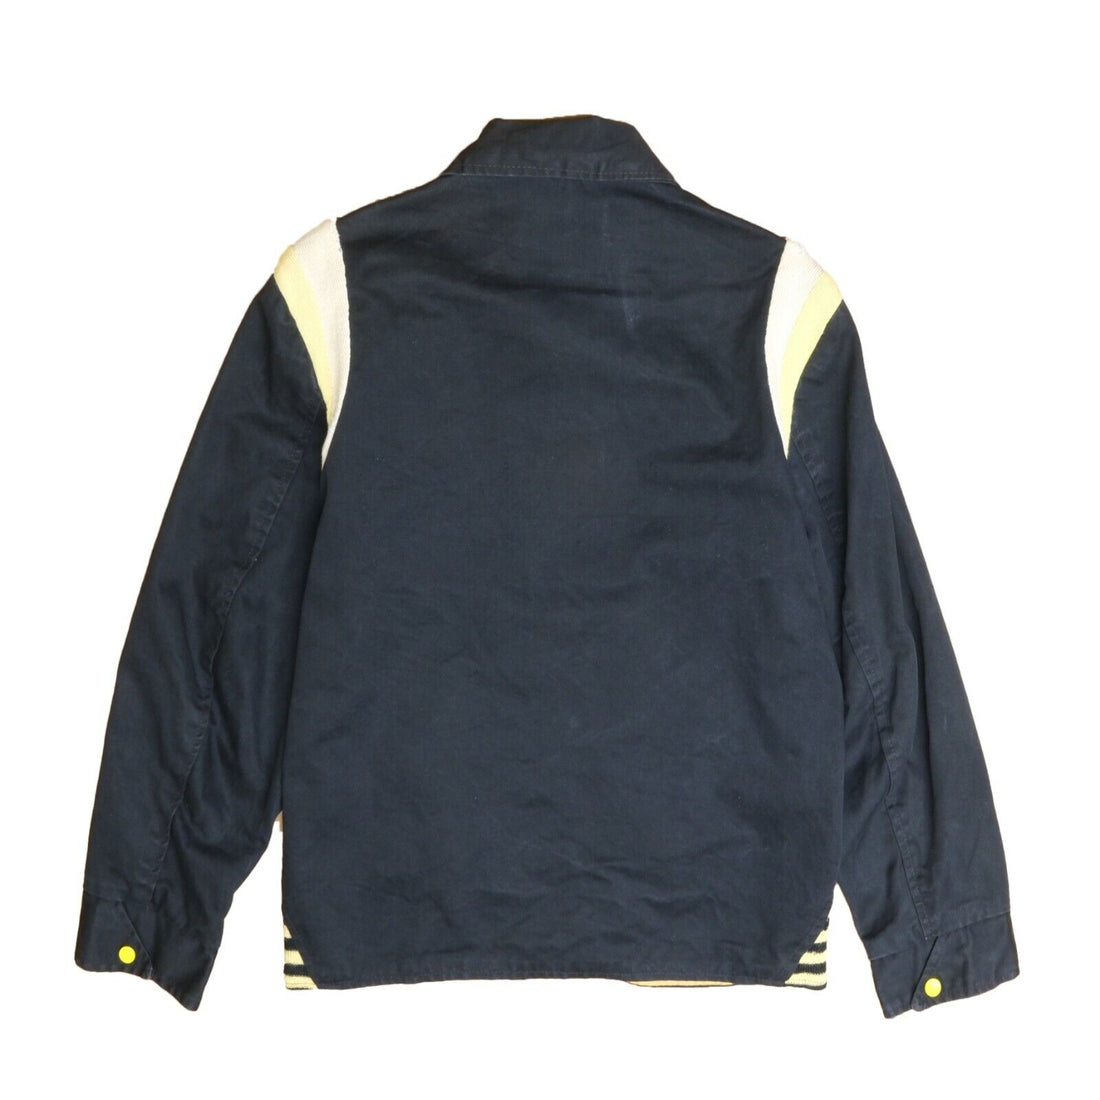 Vintage Sports Specialties Light Jacket Size Medium Black